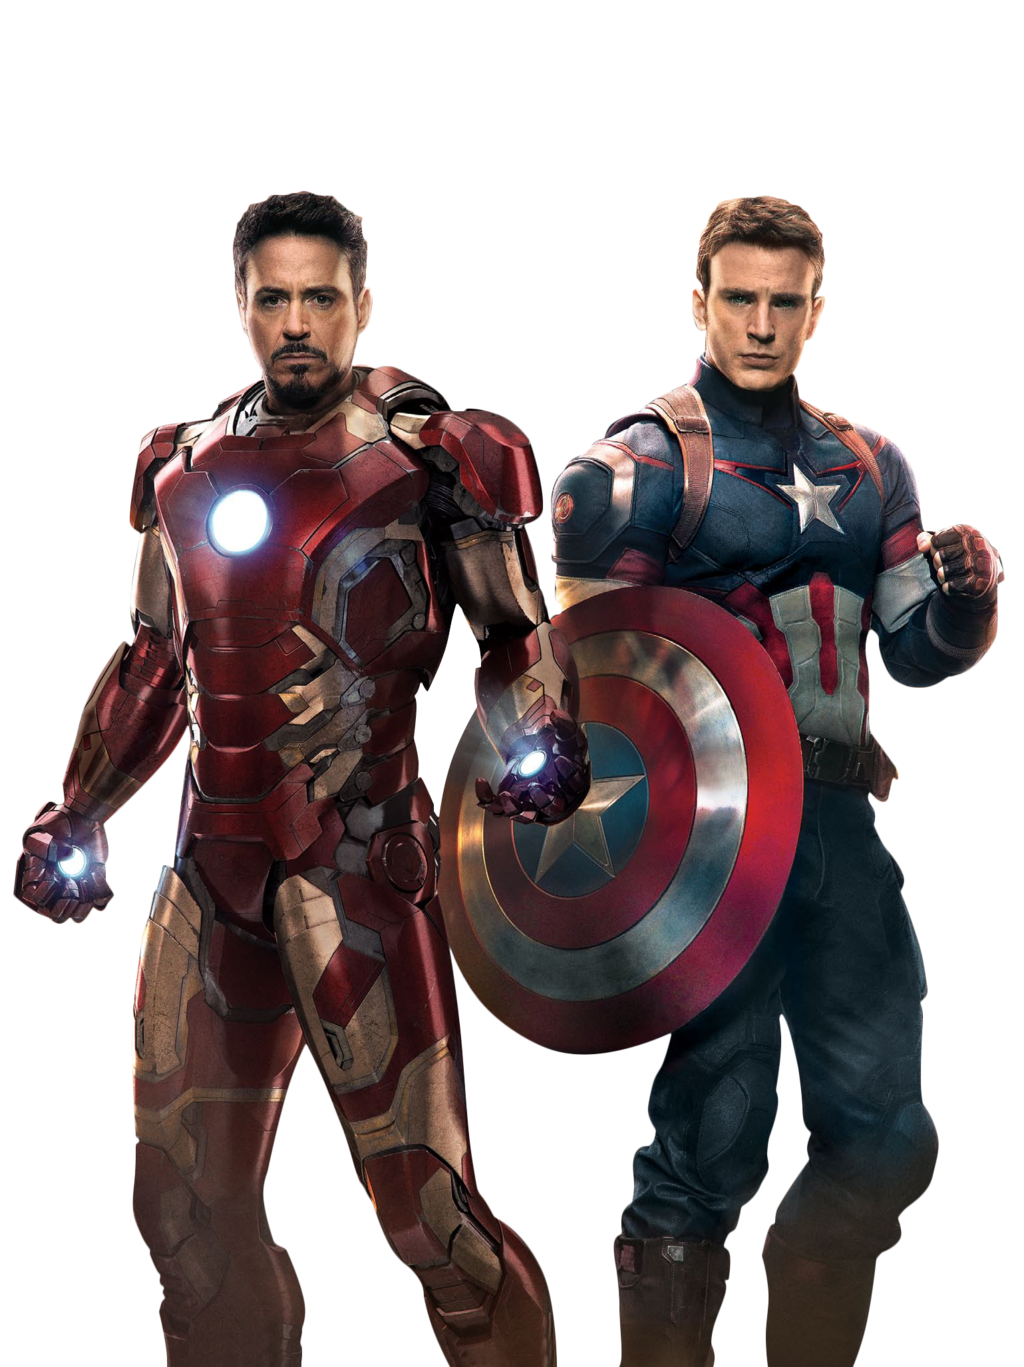 Image - Iron Man4 Avengers.pn